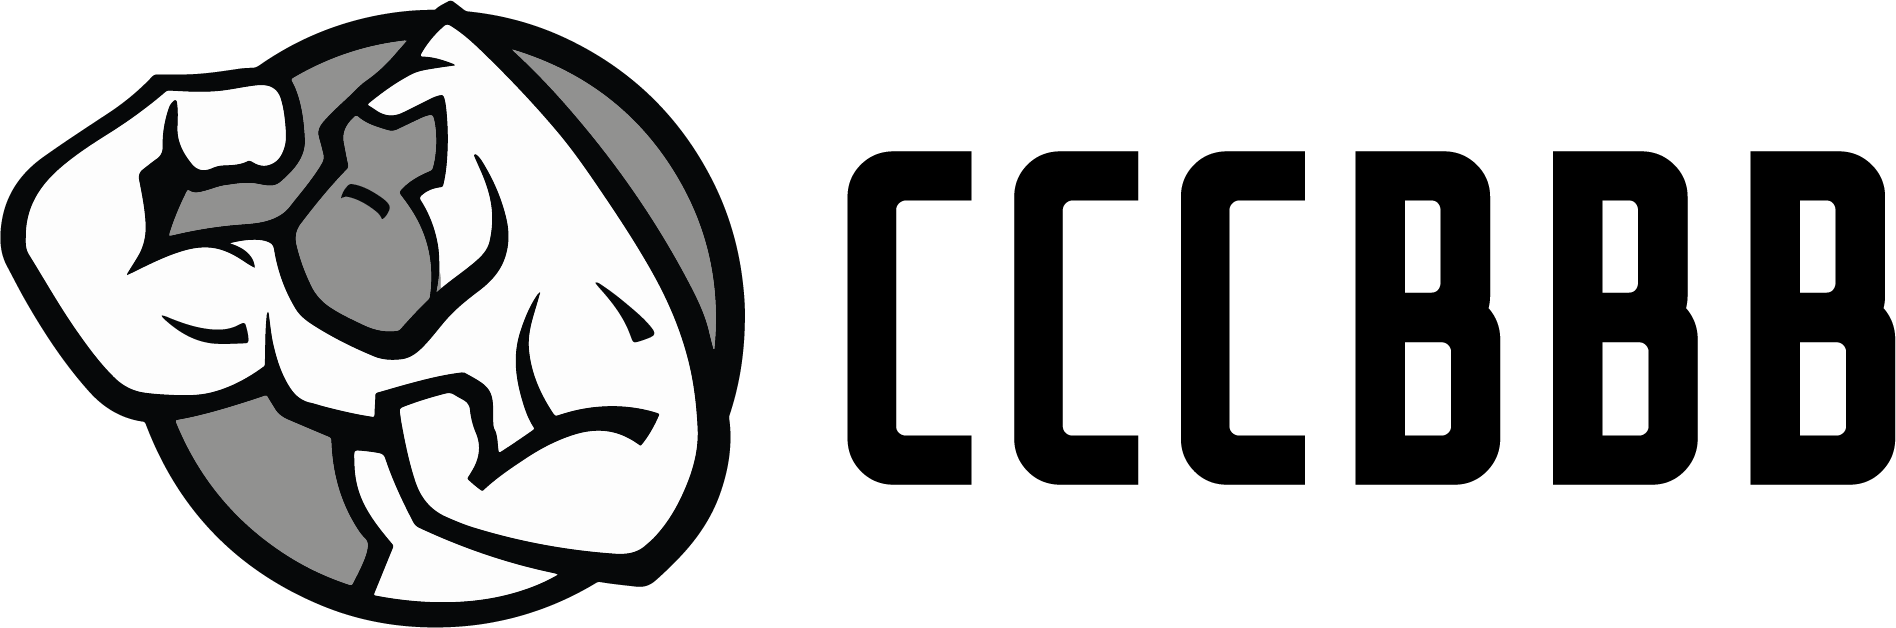 CCCBBB